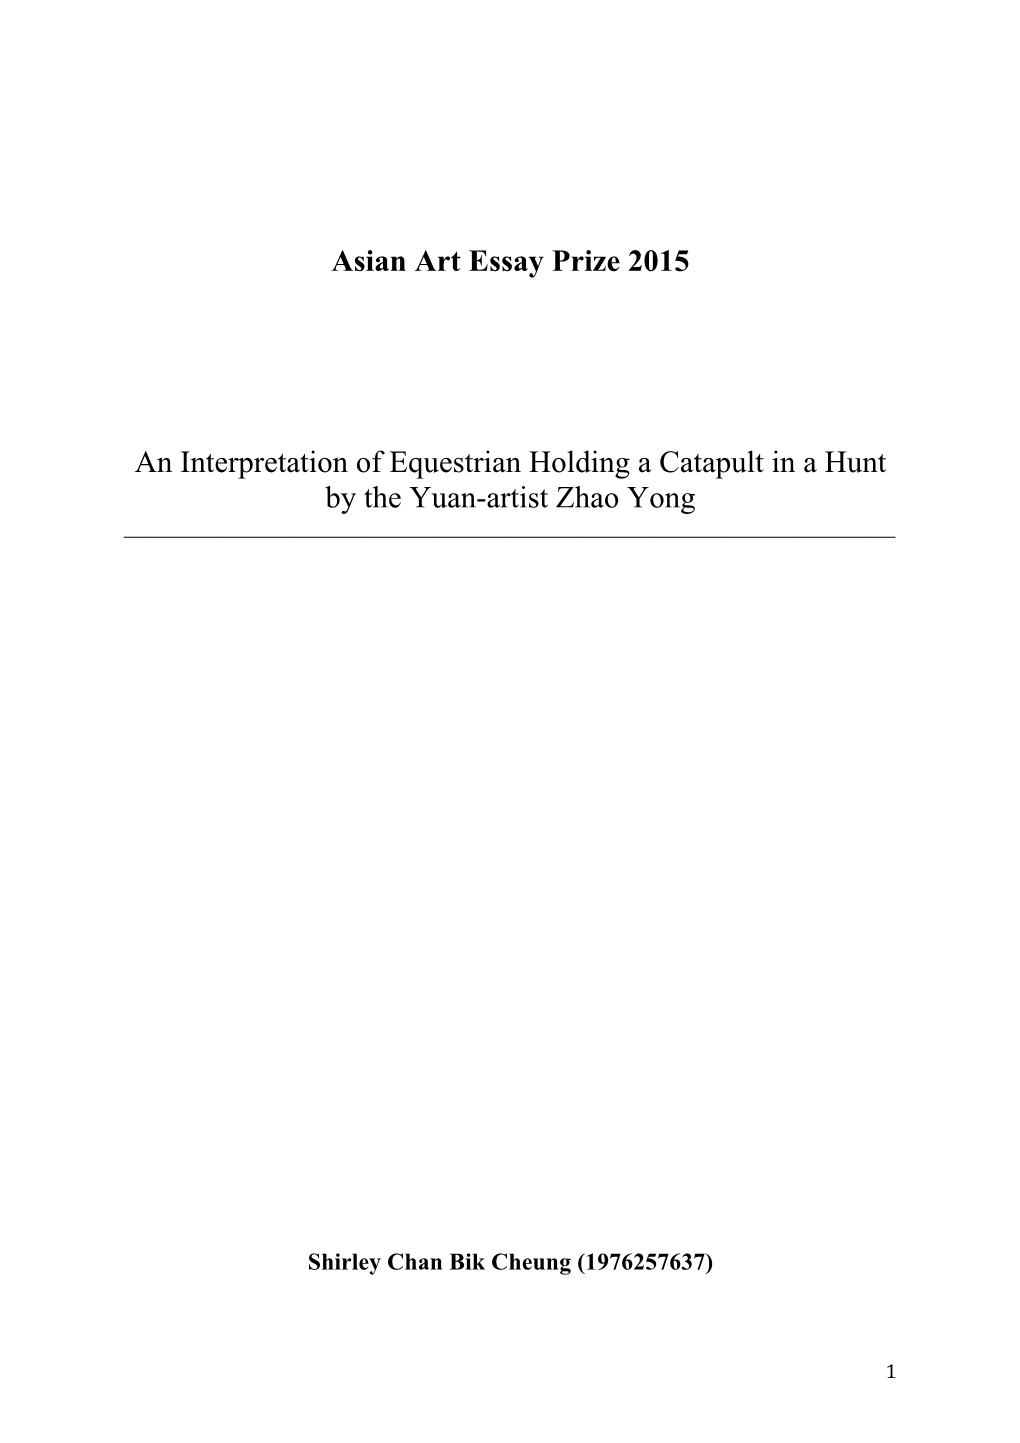 Asian Art Essay Prize 2015 an Interpretation of Equestrian Holding